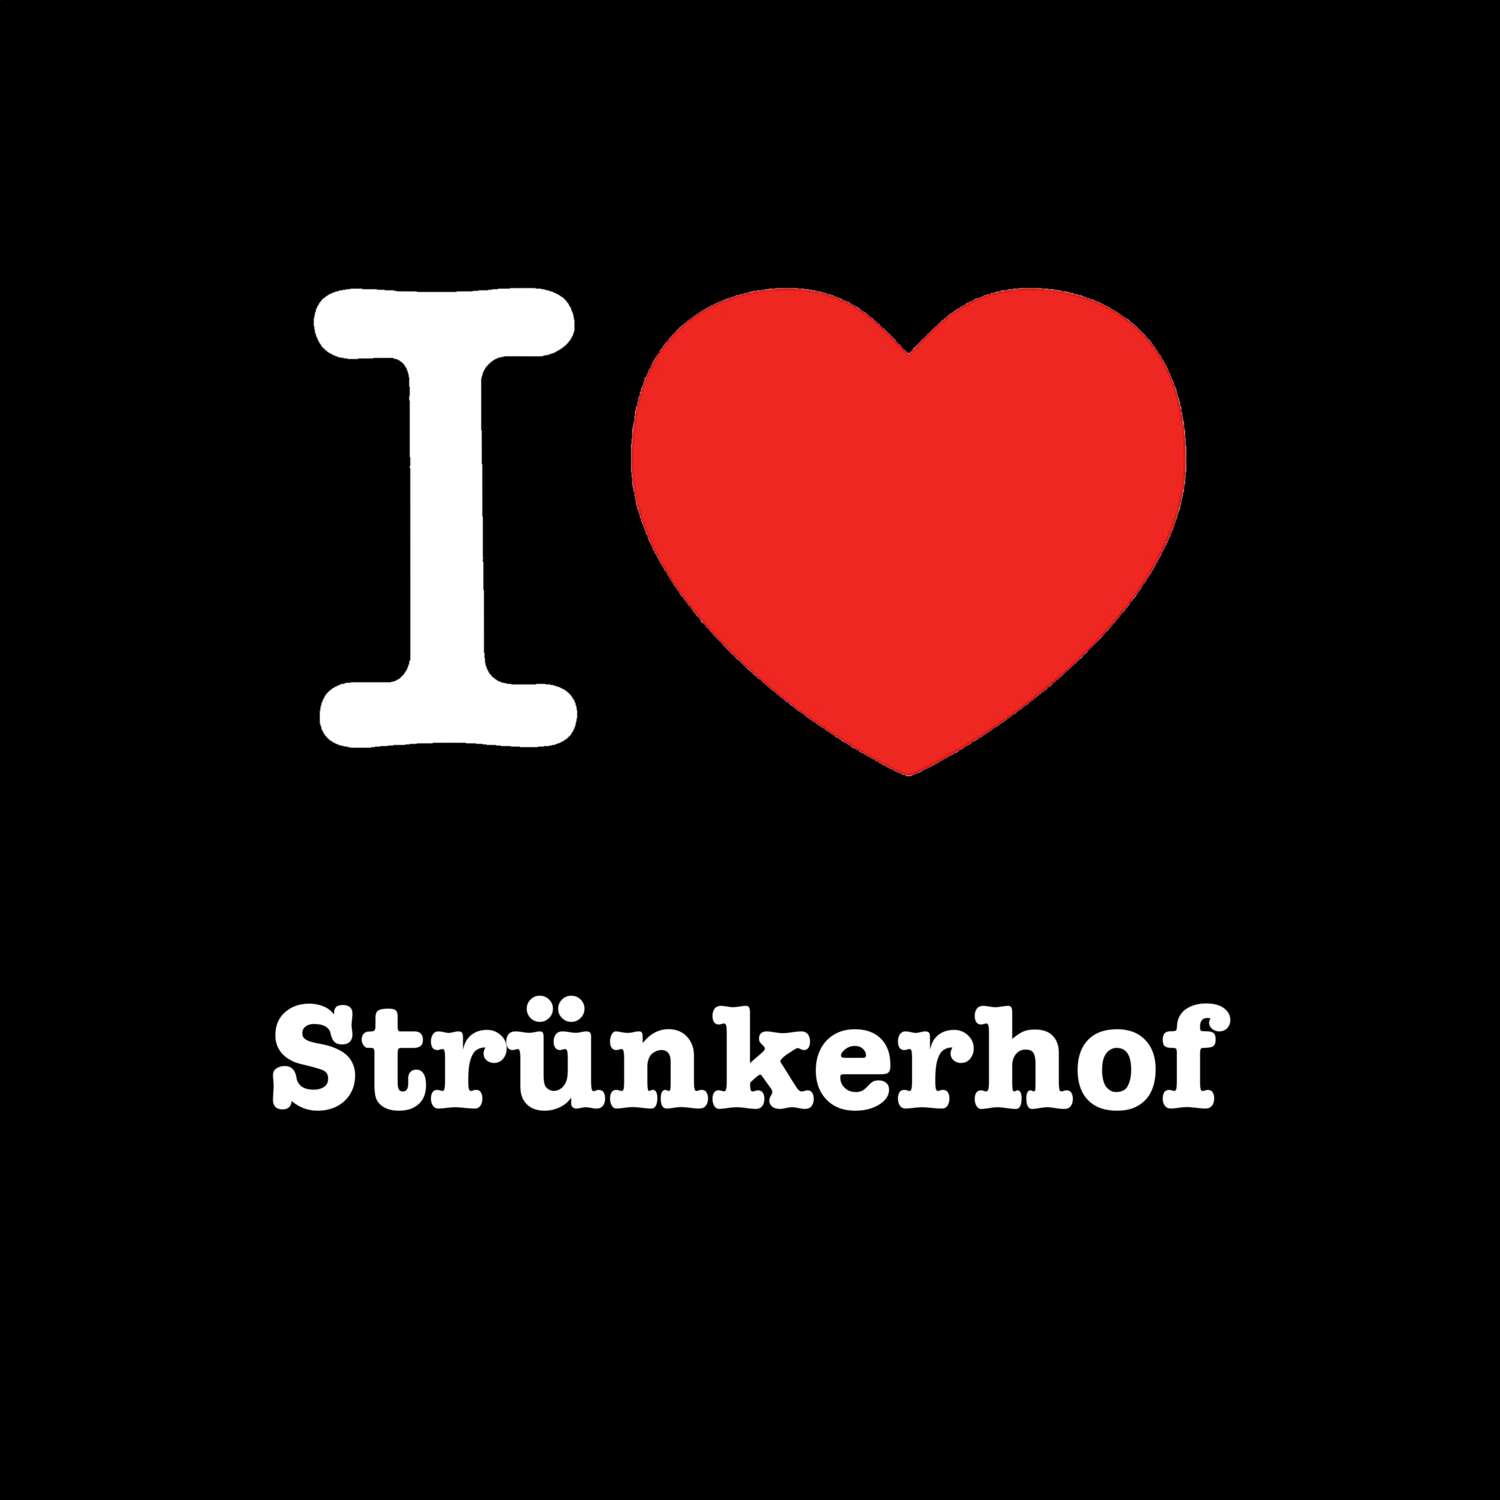 Strünkerhof T-Shirt »I love«